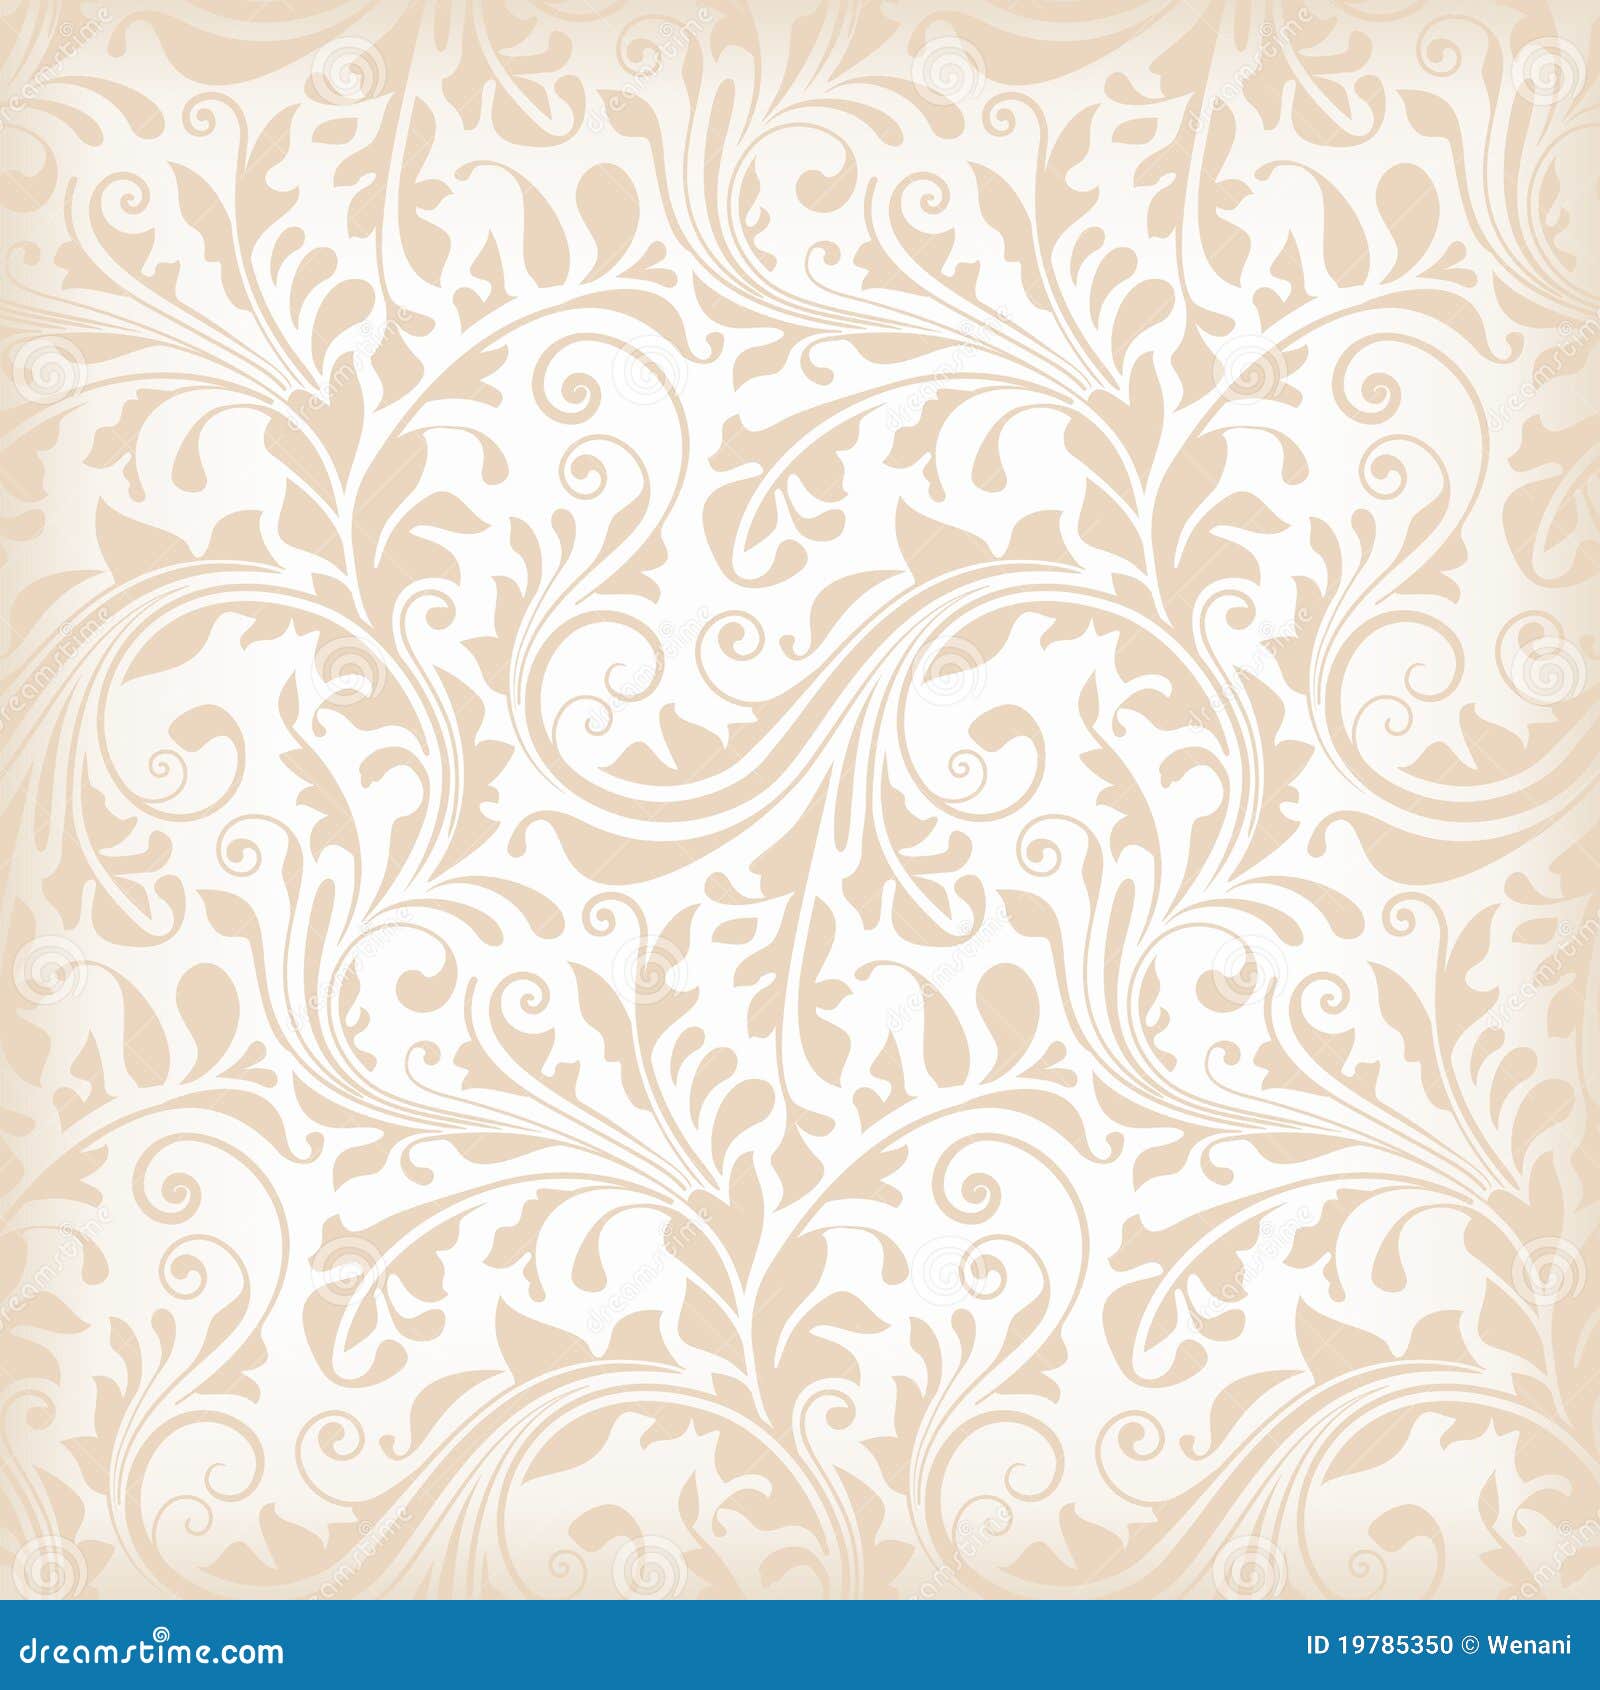 Seamless floral pattern stock vector. Illustration of swirls - 19785350